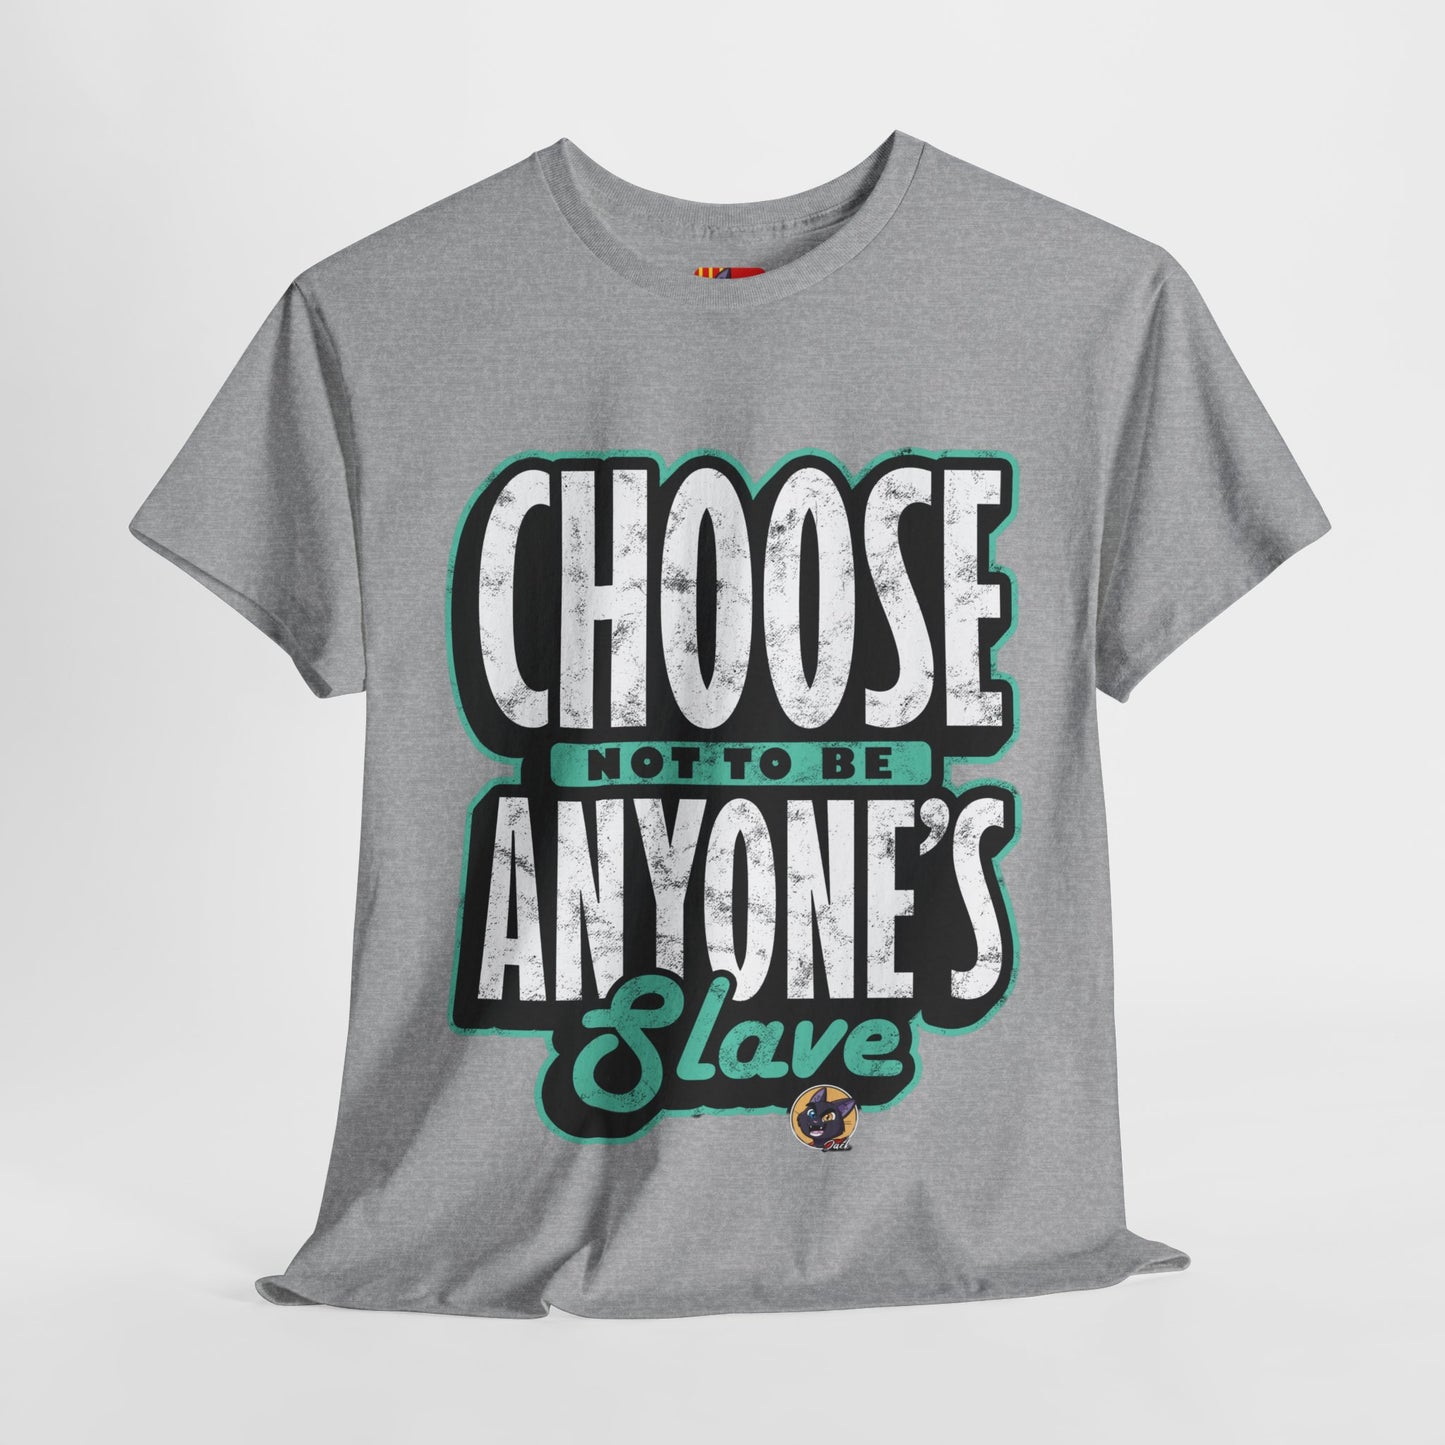 The Deep Secret T-Shirt: Choose not to be anyone's salve ﻿Jack